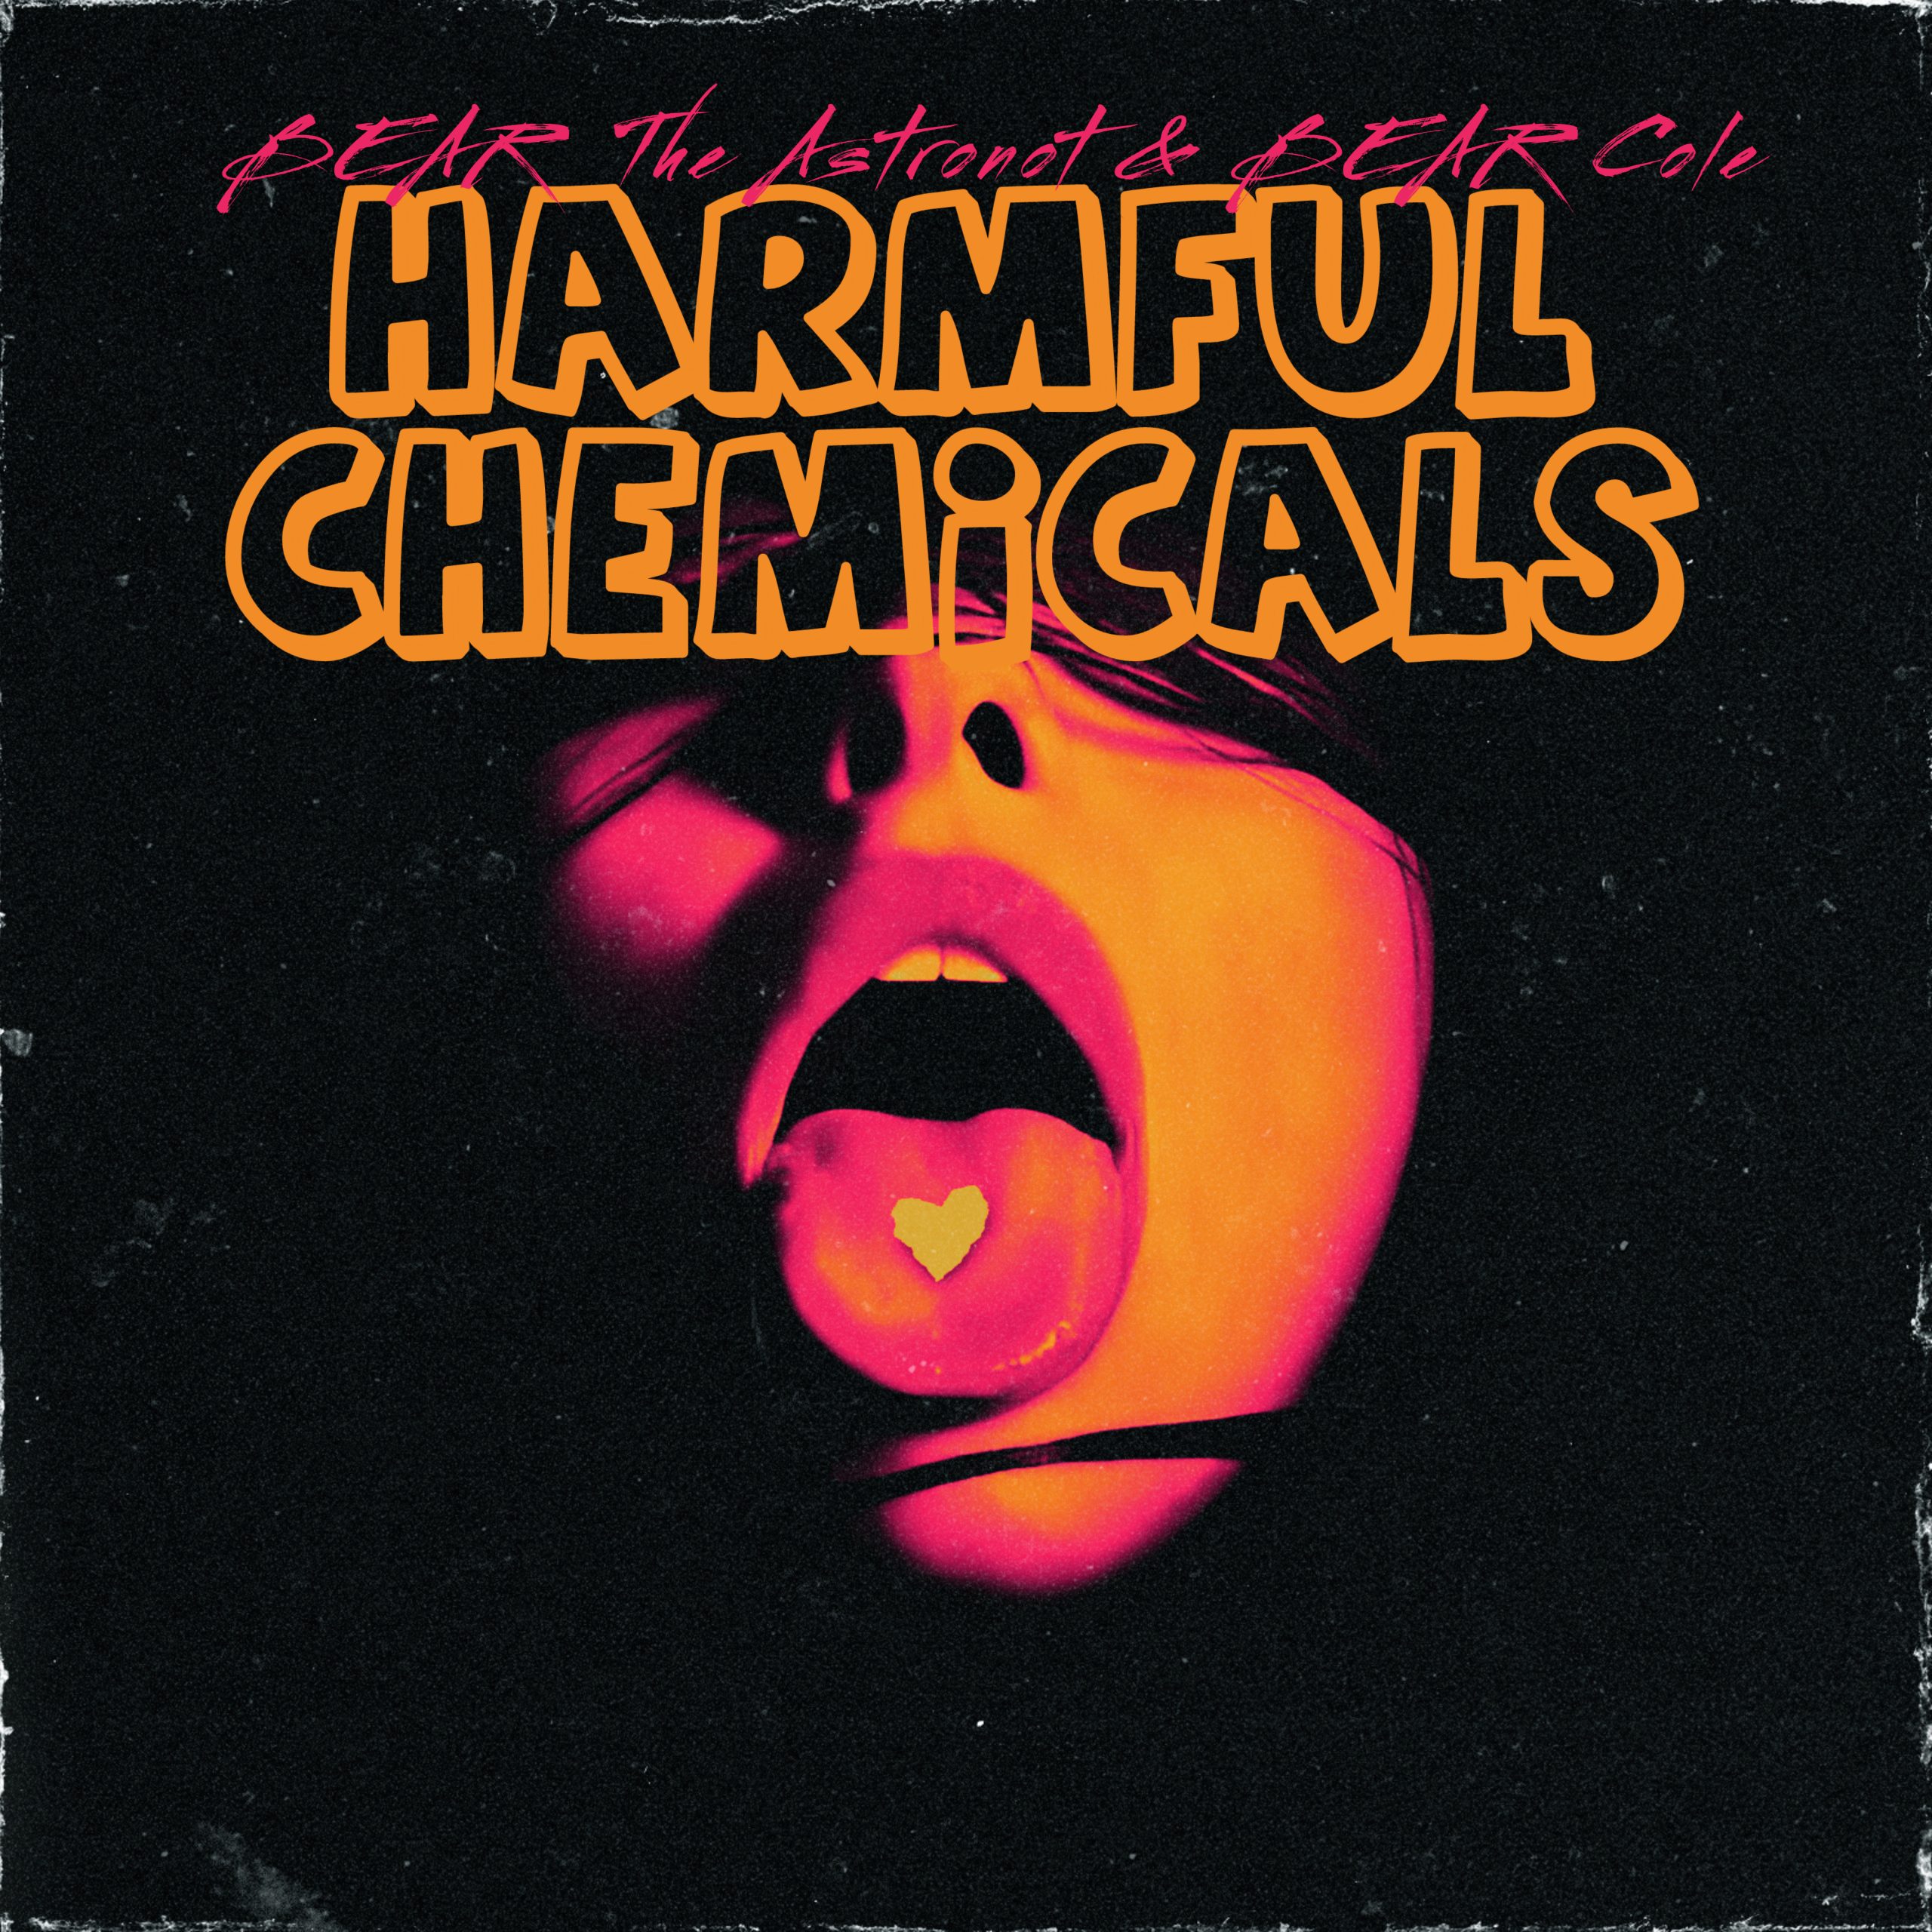 Harmful Chemicals